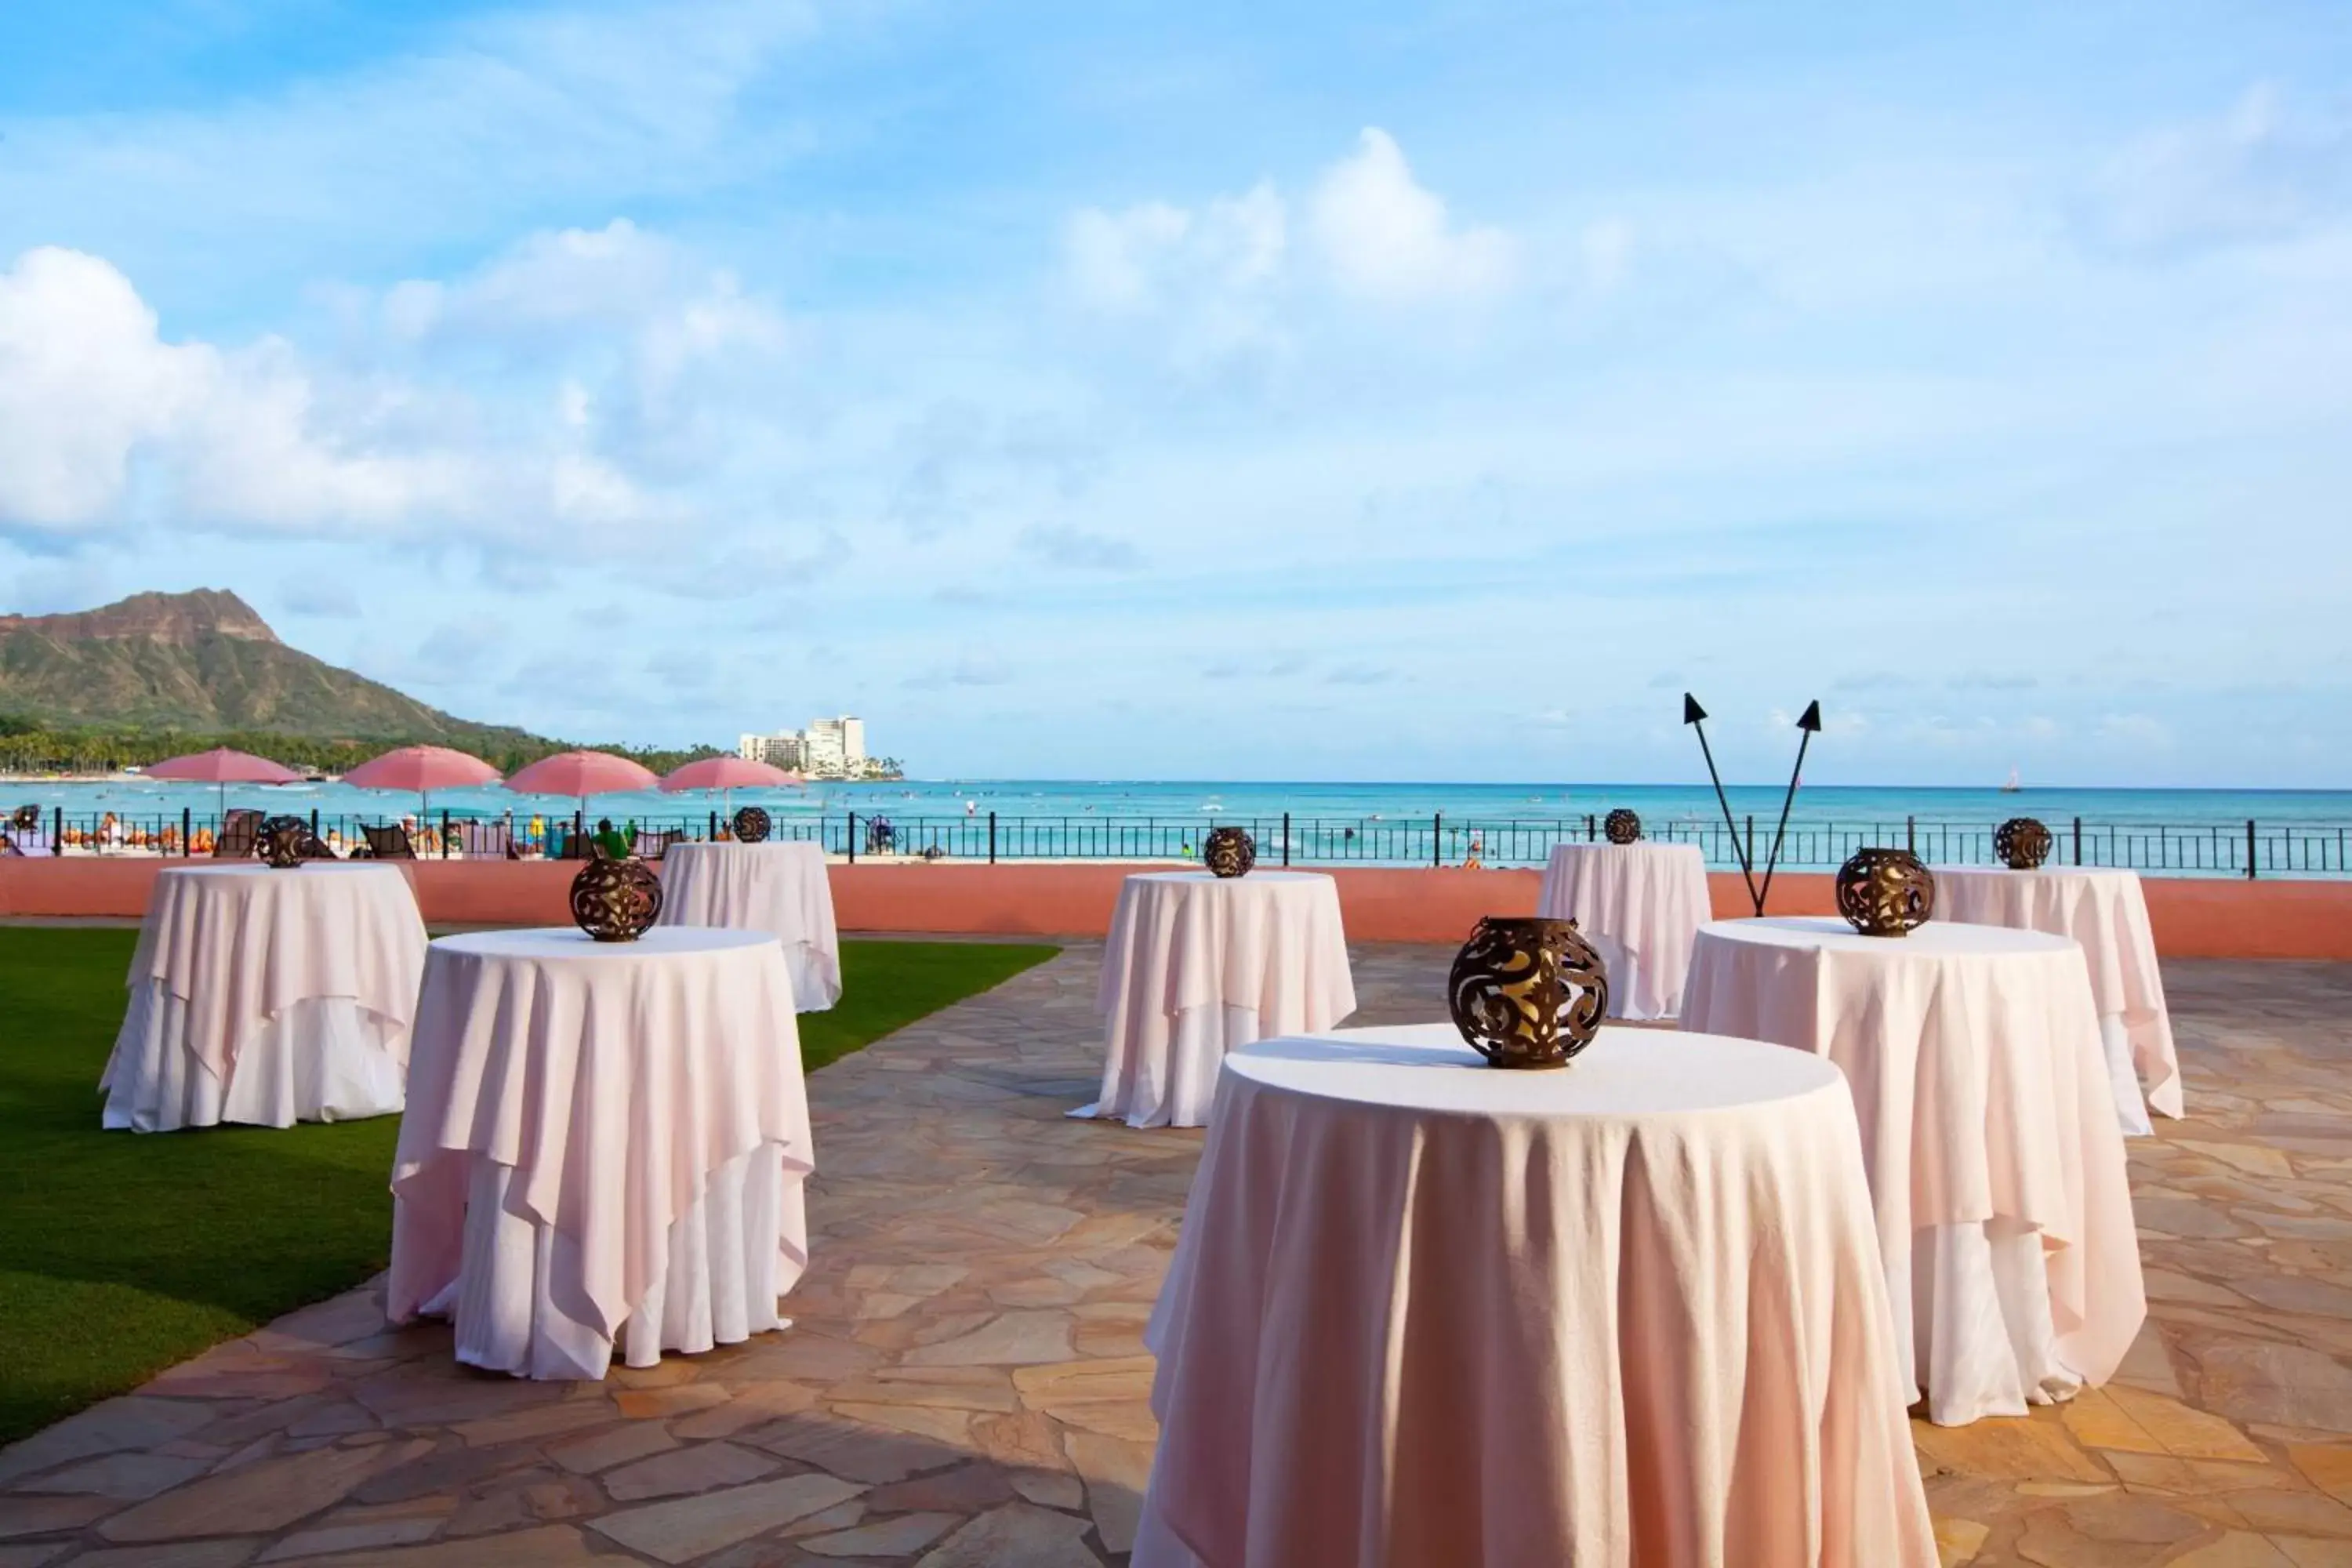 Meeting/conference room, Banquet Facilities in The Royal Hawaiian, A Luxury Collection Resort, Waikiki